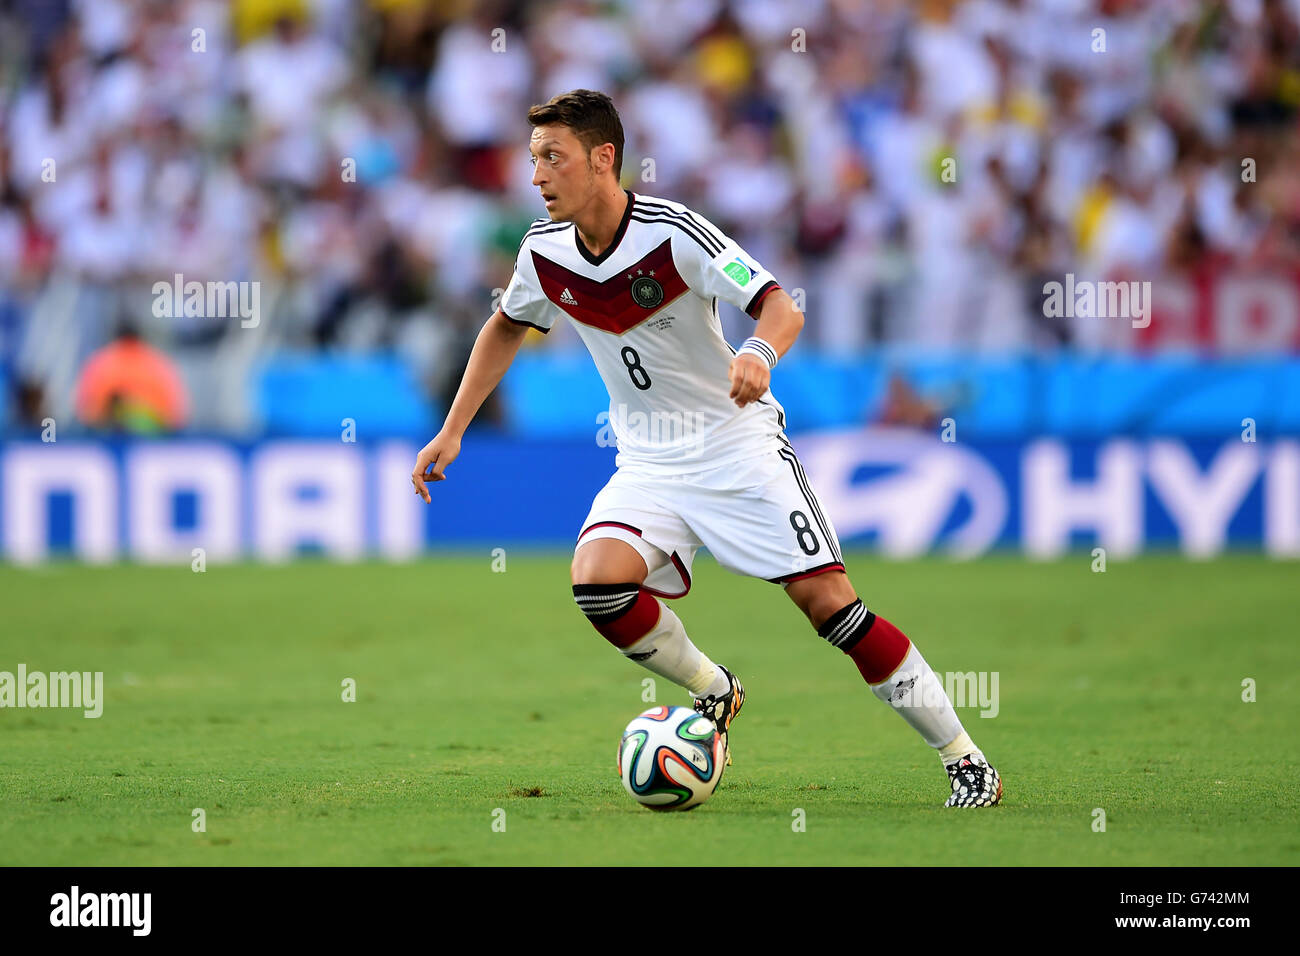 Soccer - FIFA World Cup 2014 - Group G - Germany v Ghana - Estadio Castelao. Germany's Mesut Ozil Stock Photo